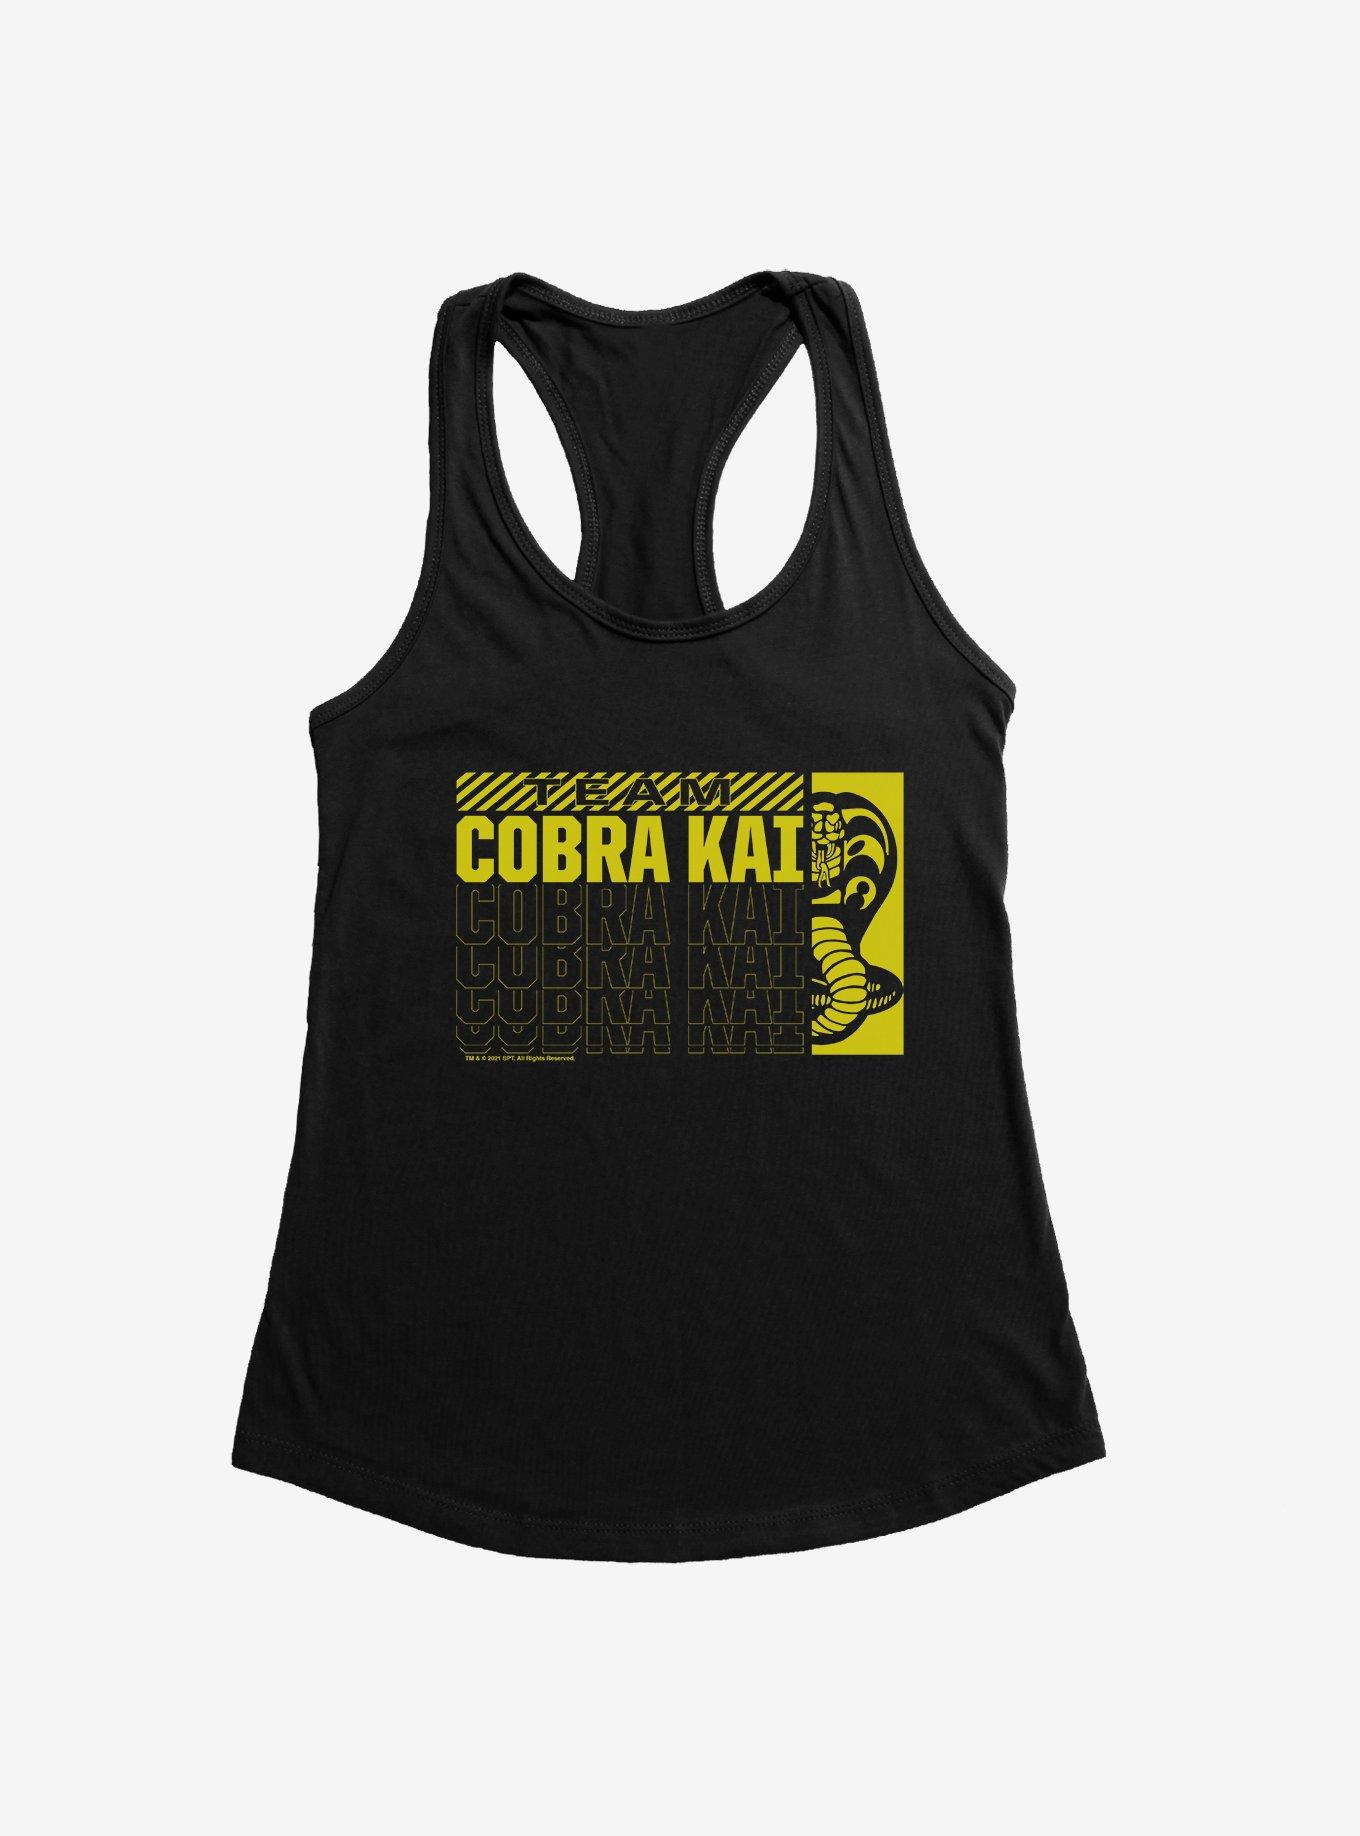 Cobra Kai S4 Logo Girls Tank